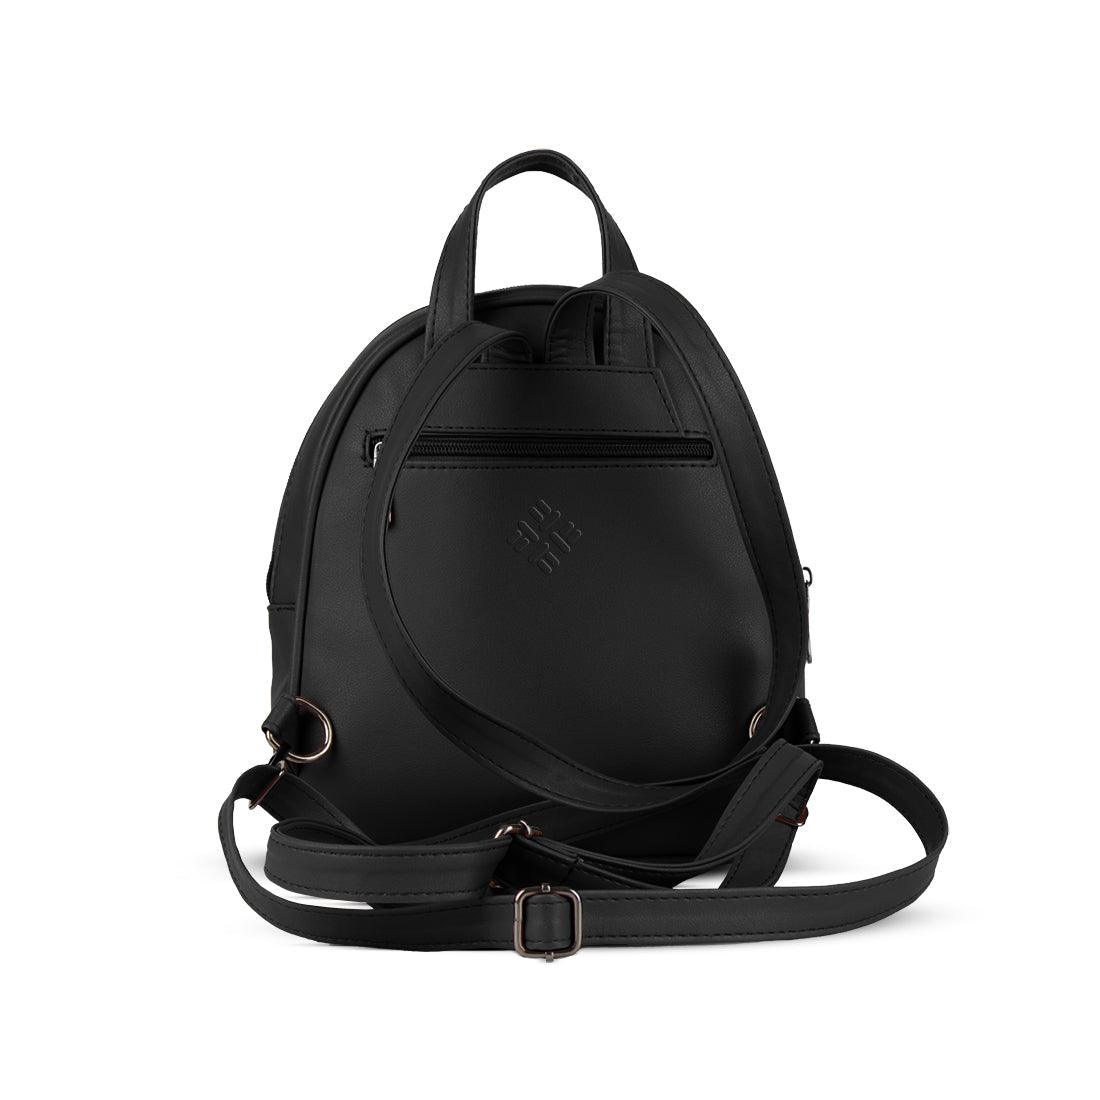 Black O Mini Backpacks Woman With Veil - CANVAEGYPT